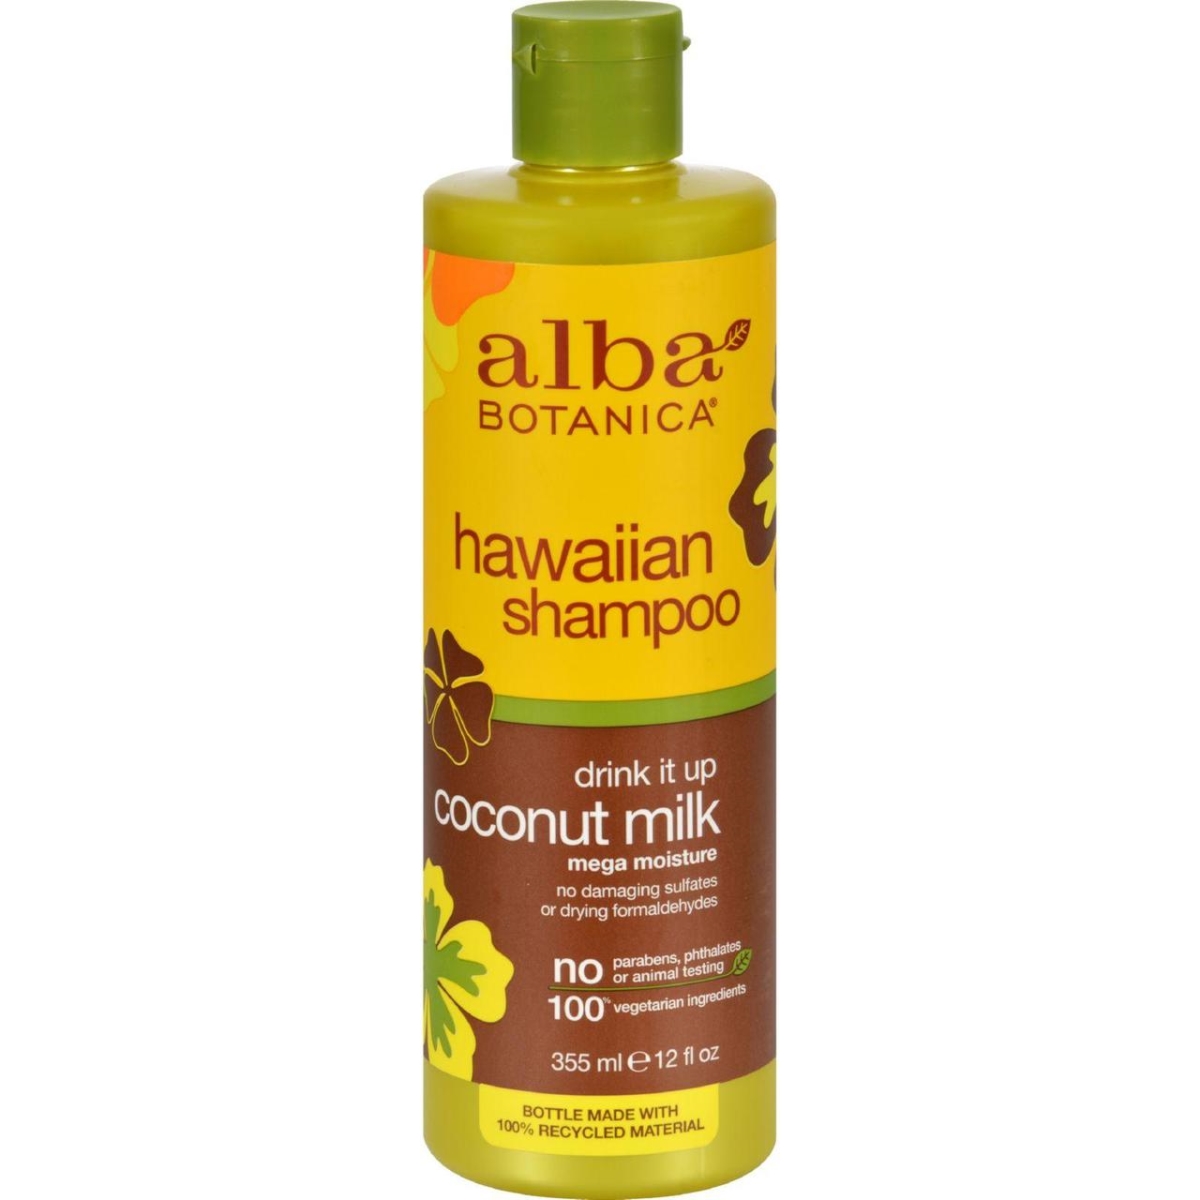 Hg0258095 12 Fl Oz Natural Hawaiian Shampoo, Drink It Up Coconut Milk